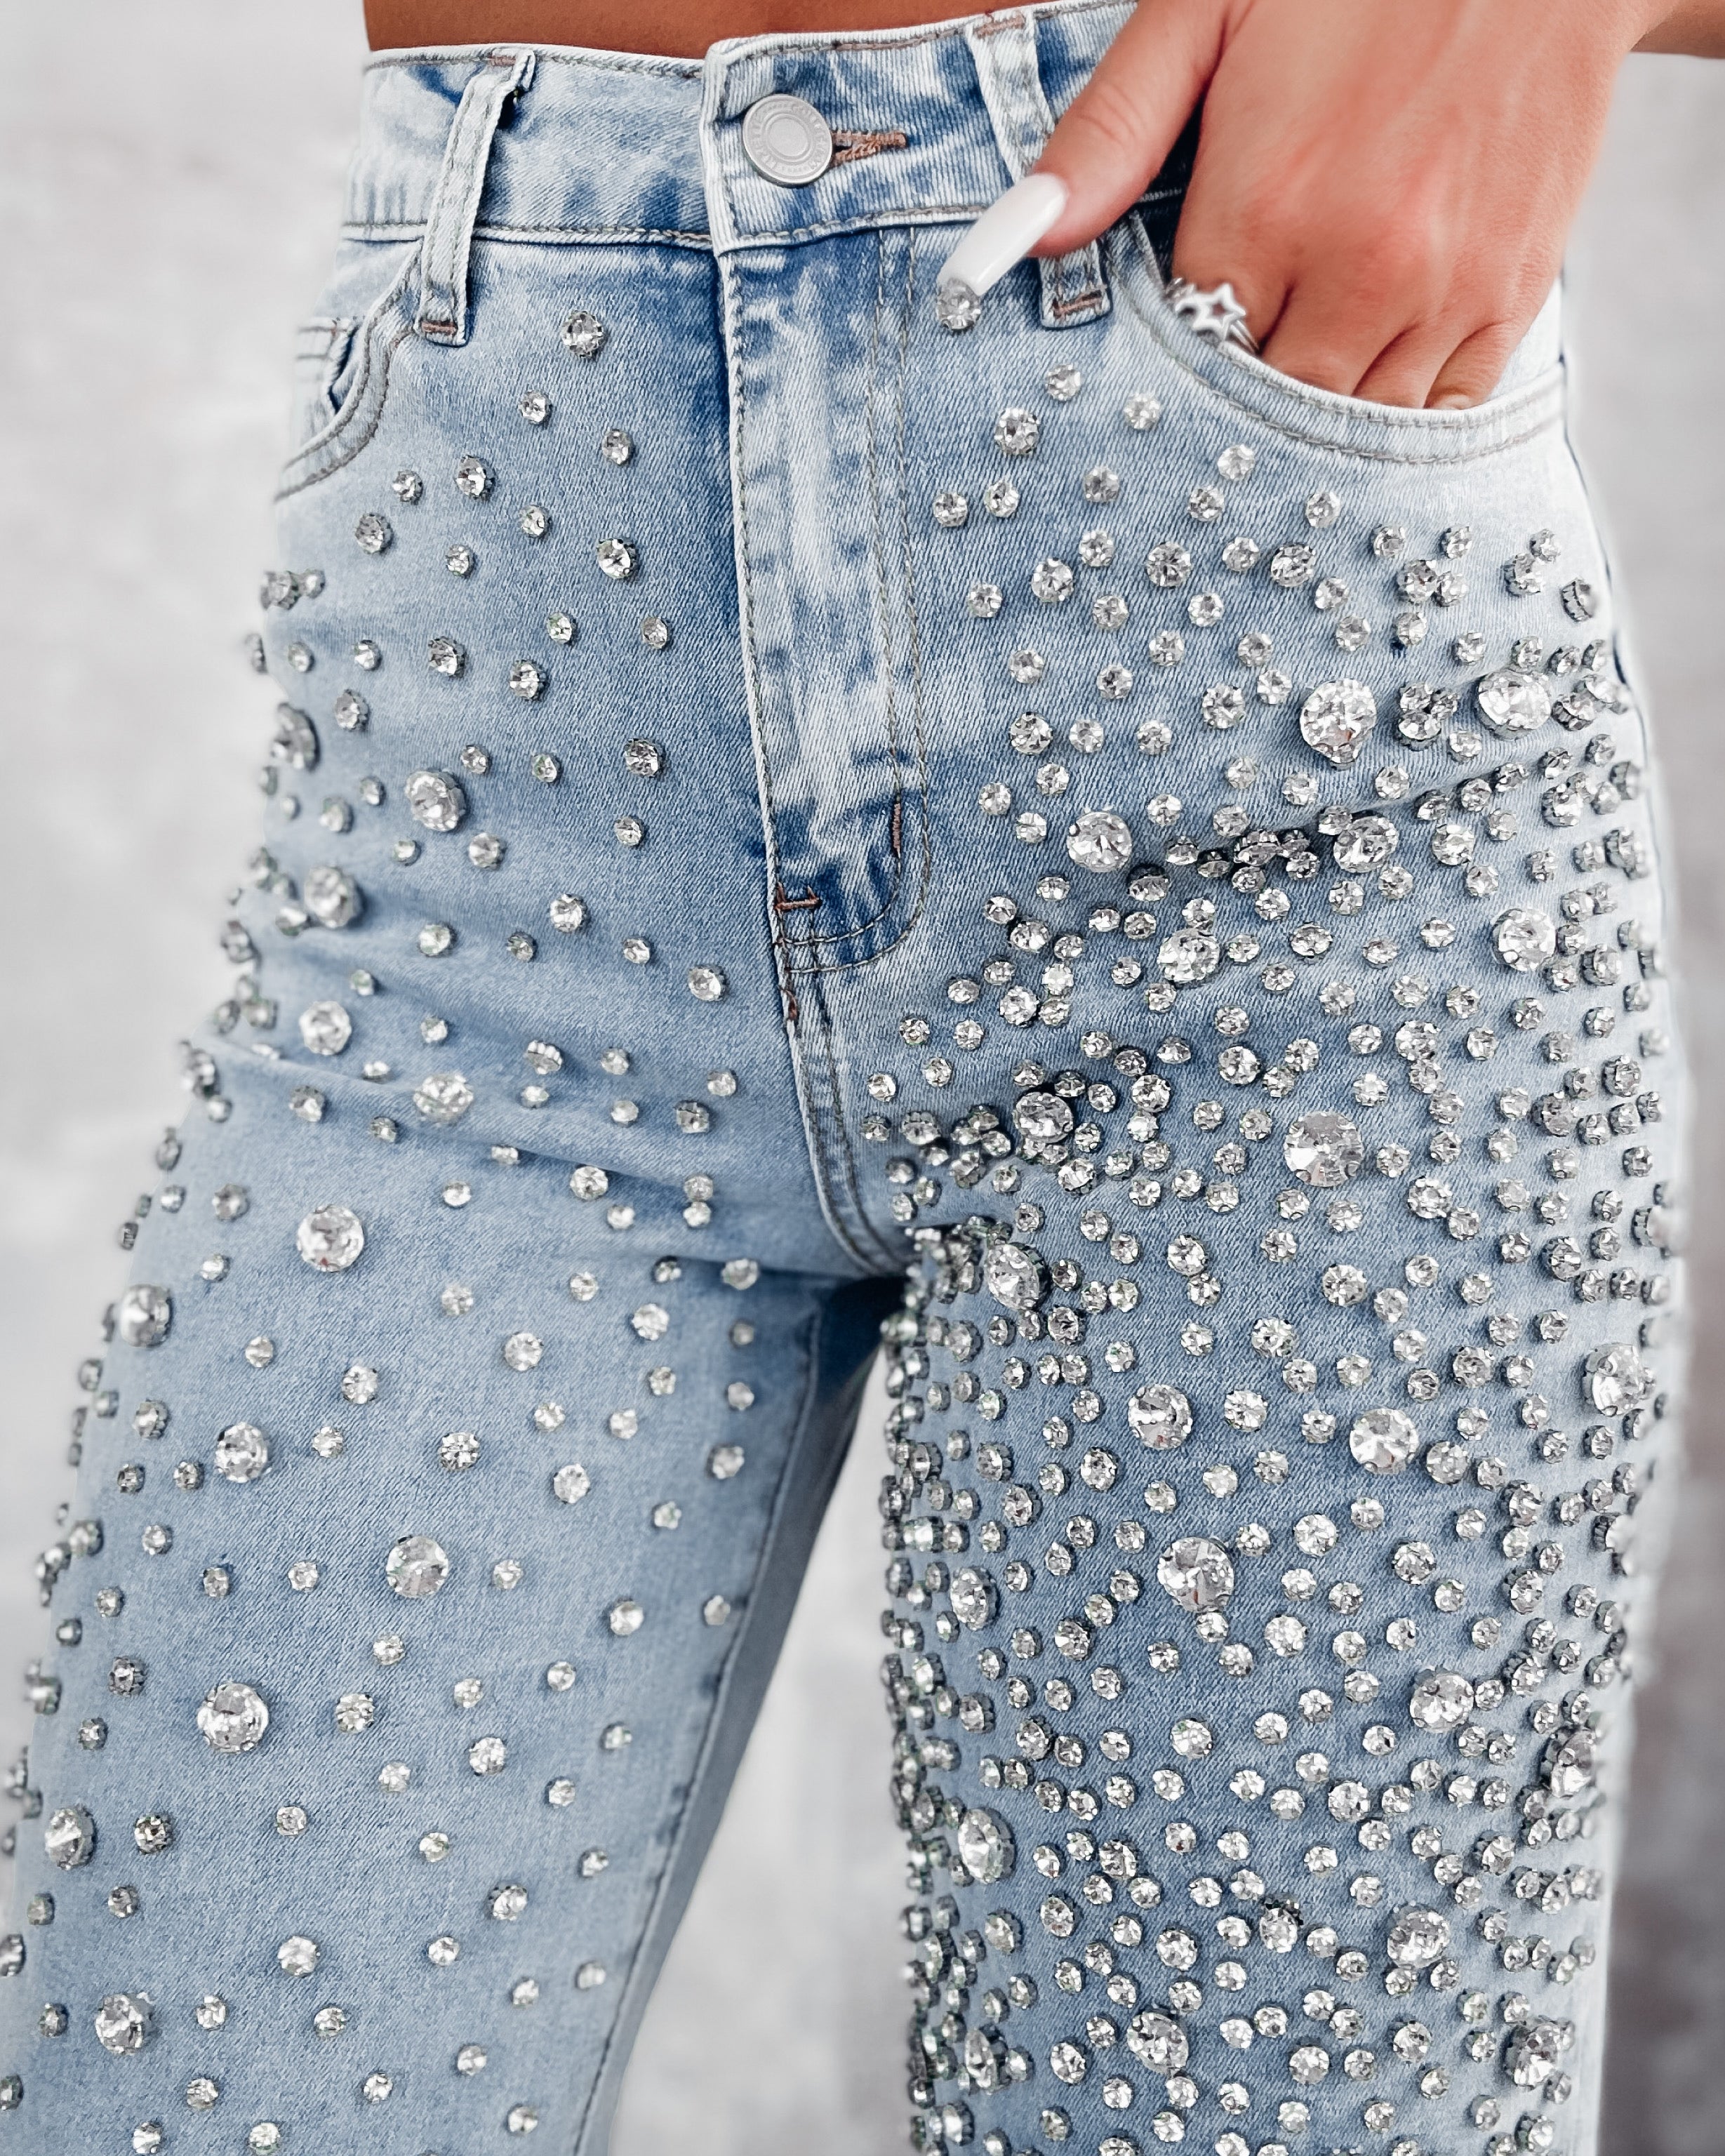 Sparkling Glam Girl Denim Jeans - Denim